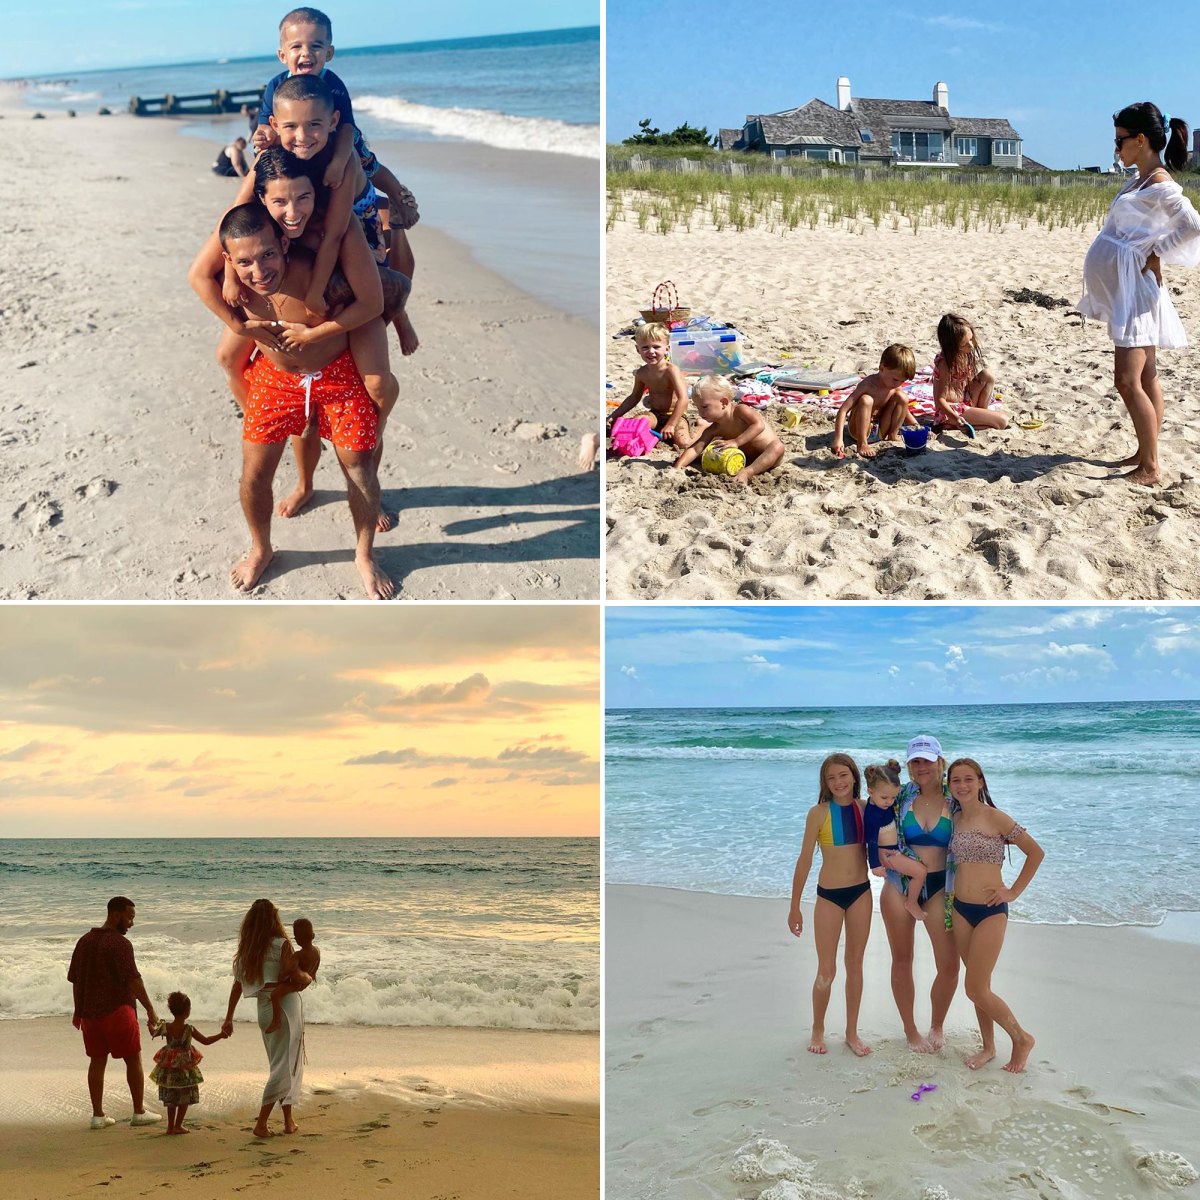 All Ages Topless Beach - Celeb Families' Beach Trips Amid Coronavirus Pandemic: Pics